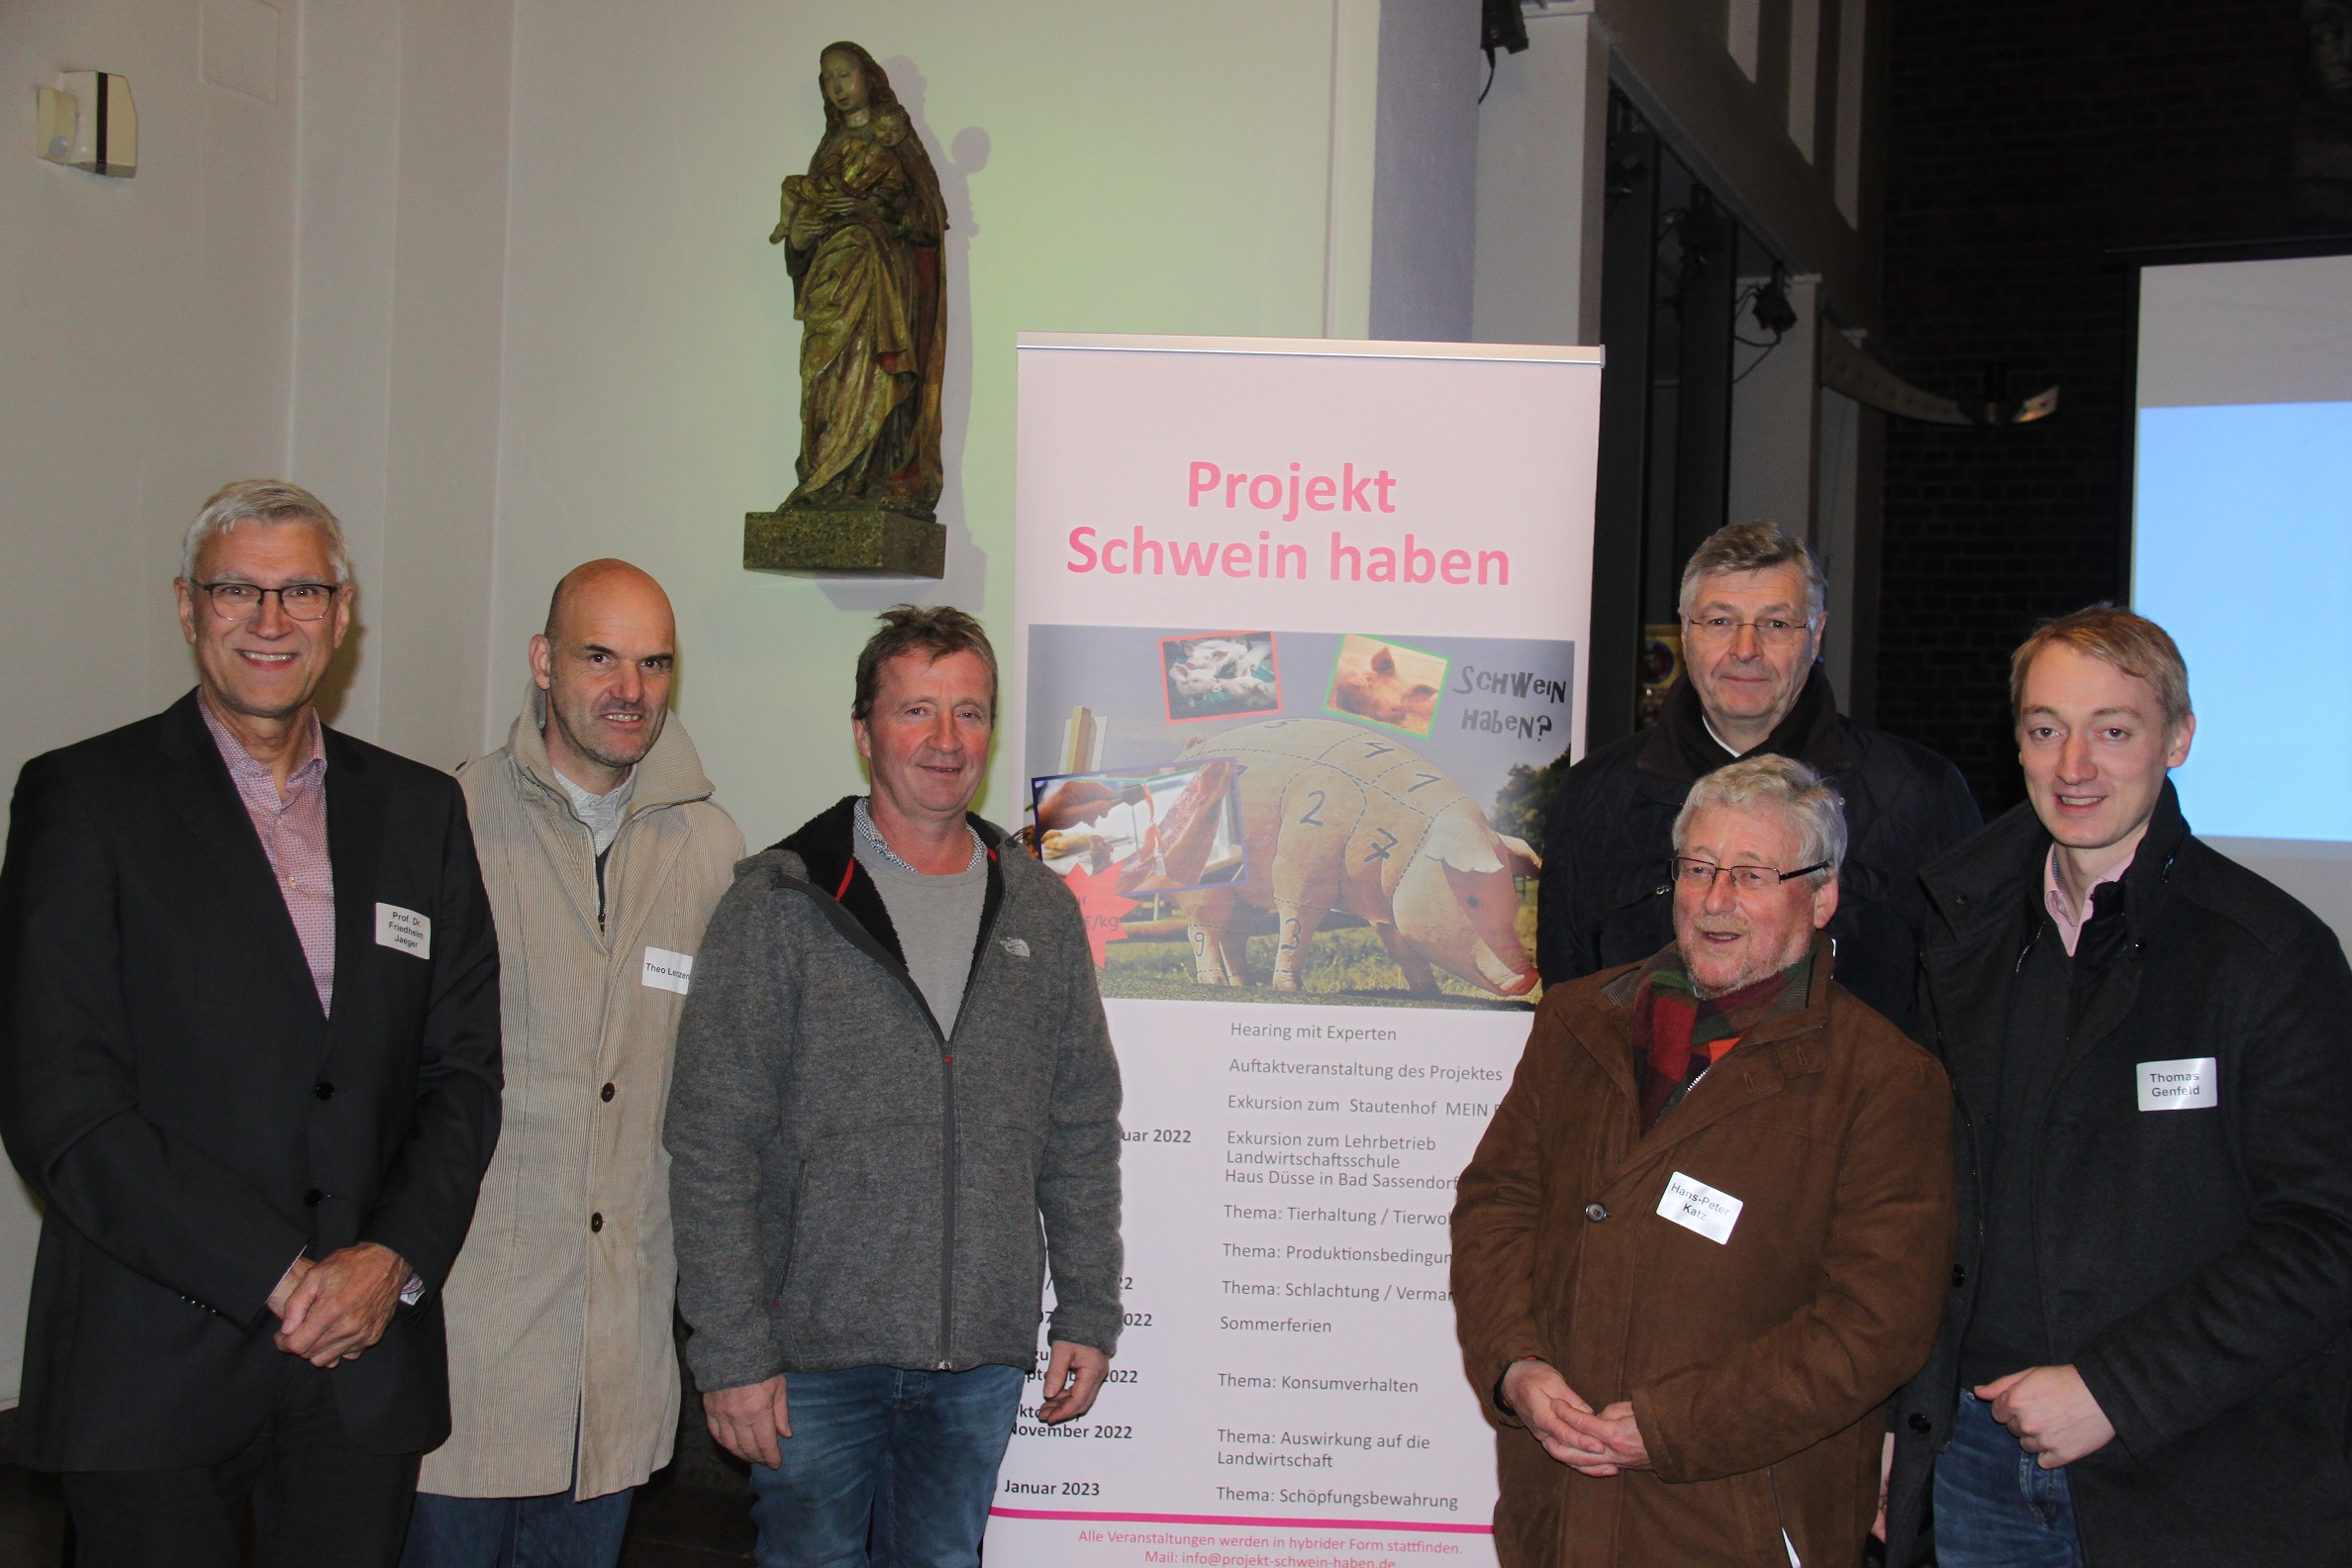 v.l.n.r.: Prof. Dr. Jaeger, Theo Lenzen, Christoph Leiders, Hans Peter Katz, Bernhard Conzen, Thomas Genfeld